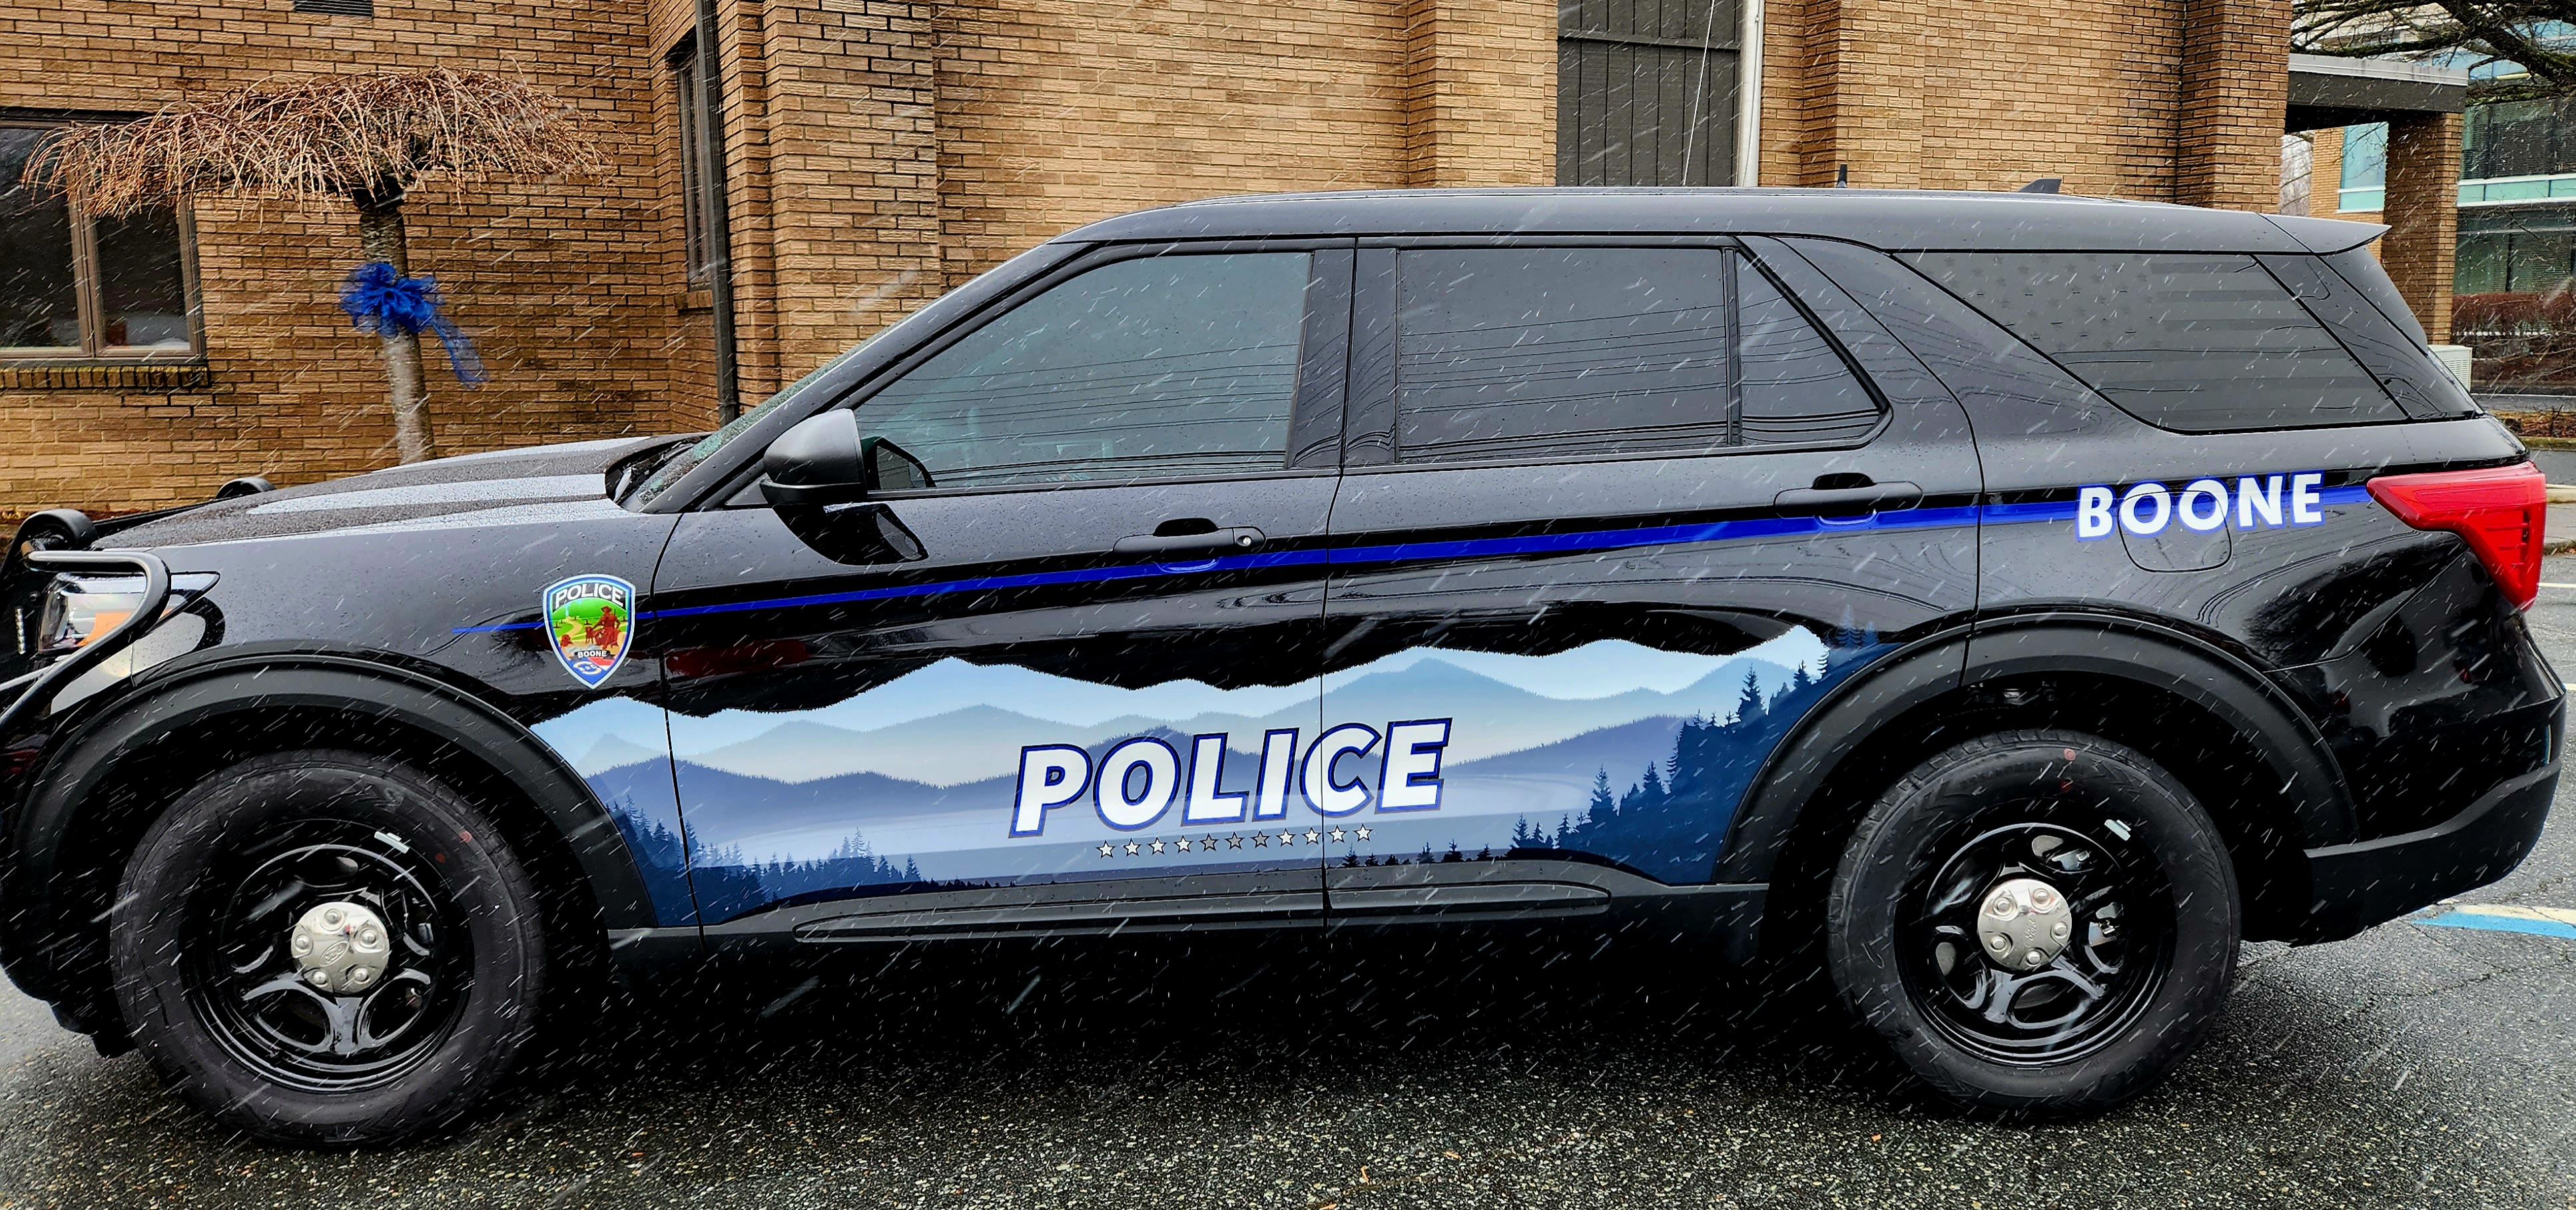 NEW Boone Police Car Design